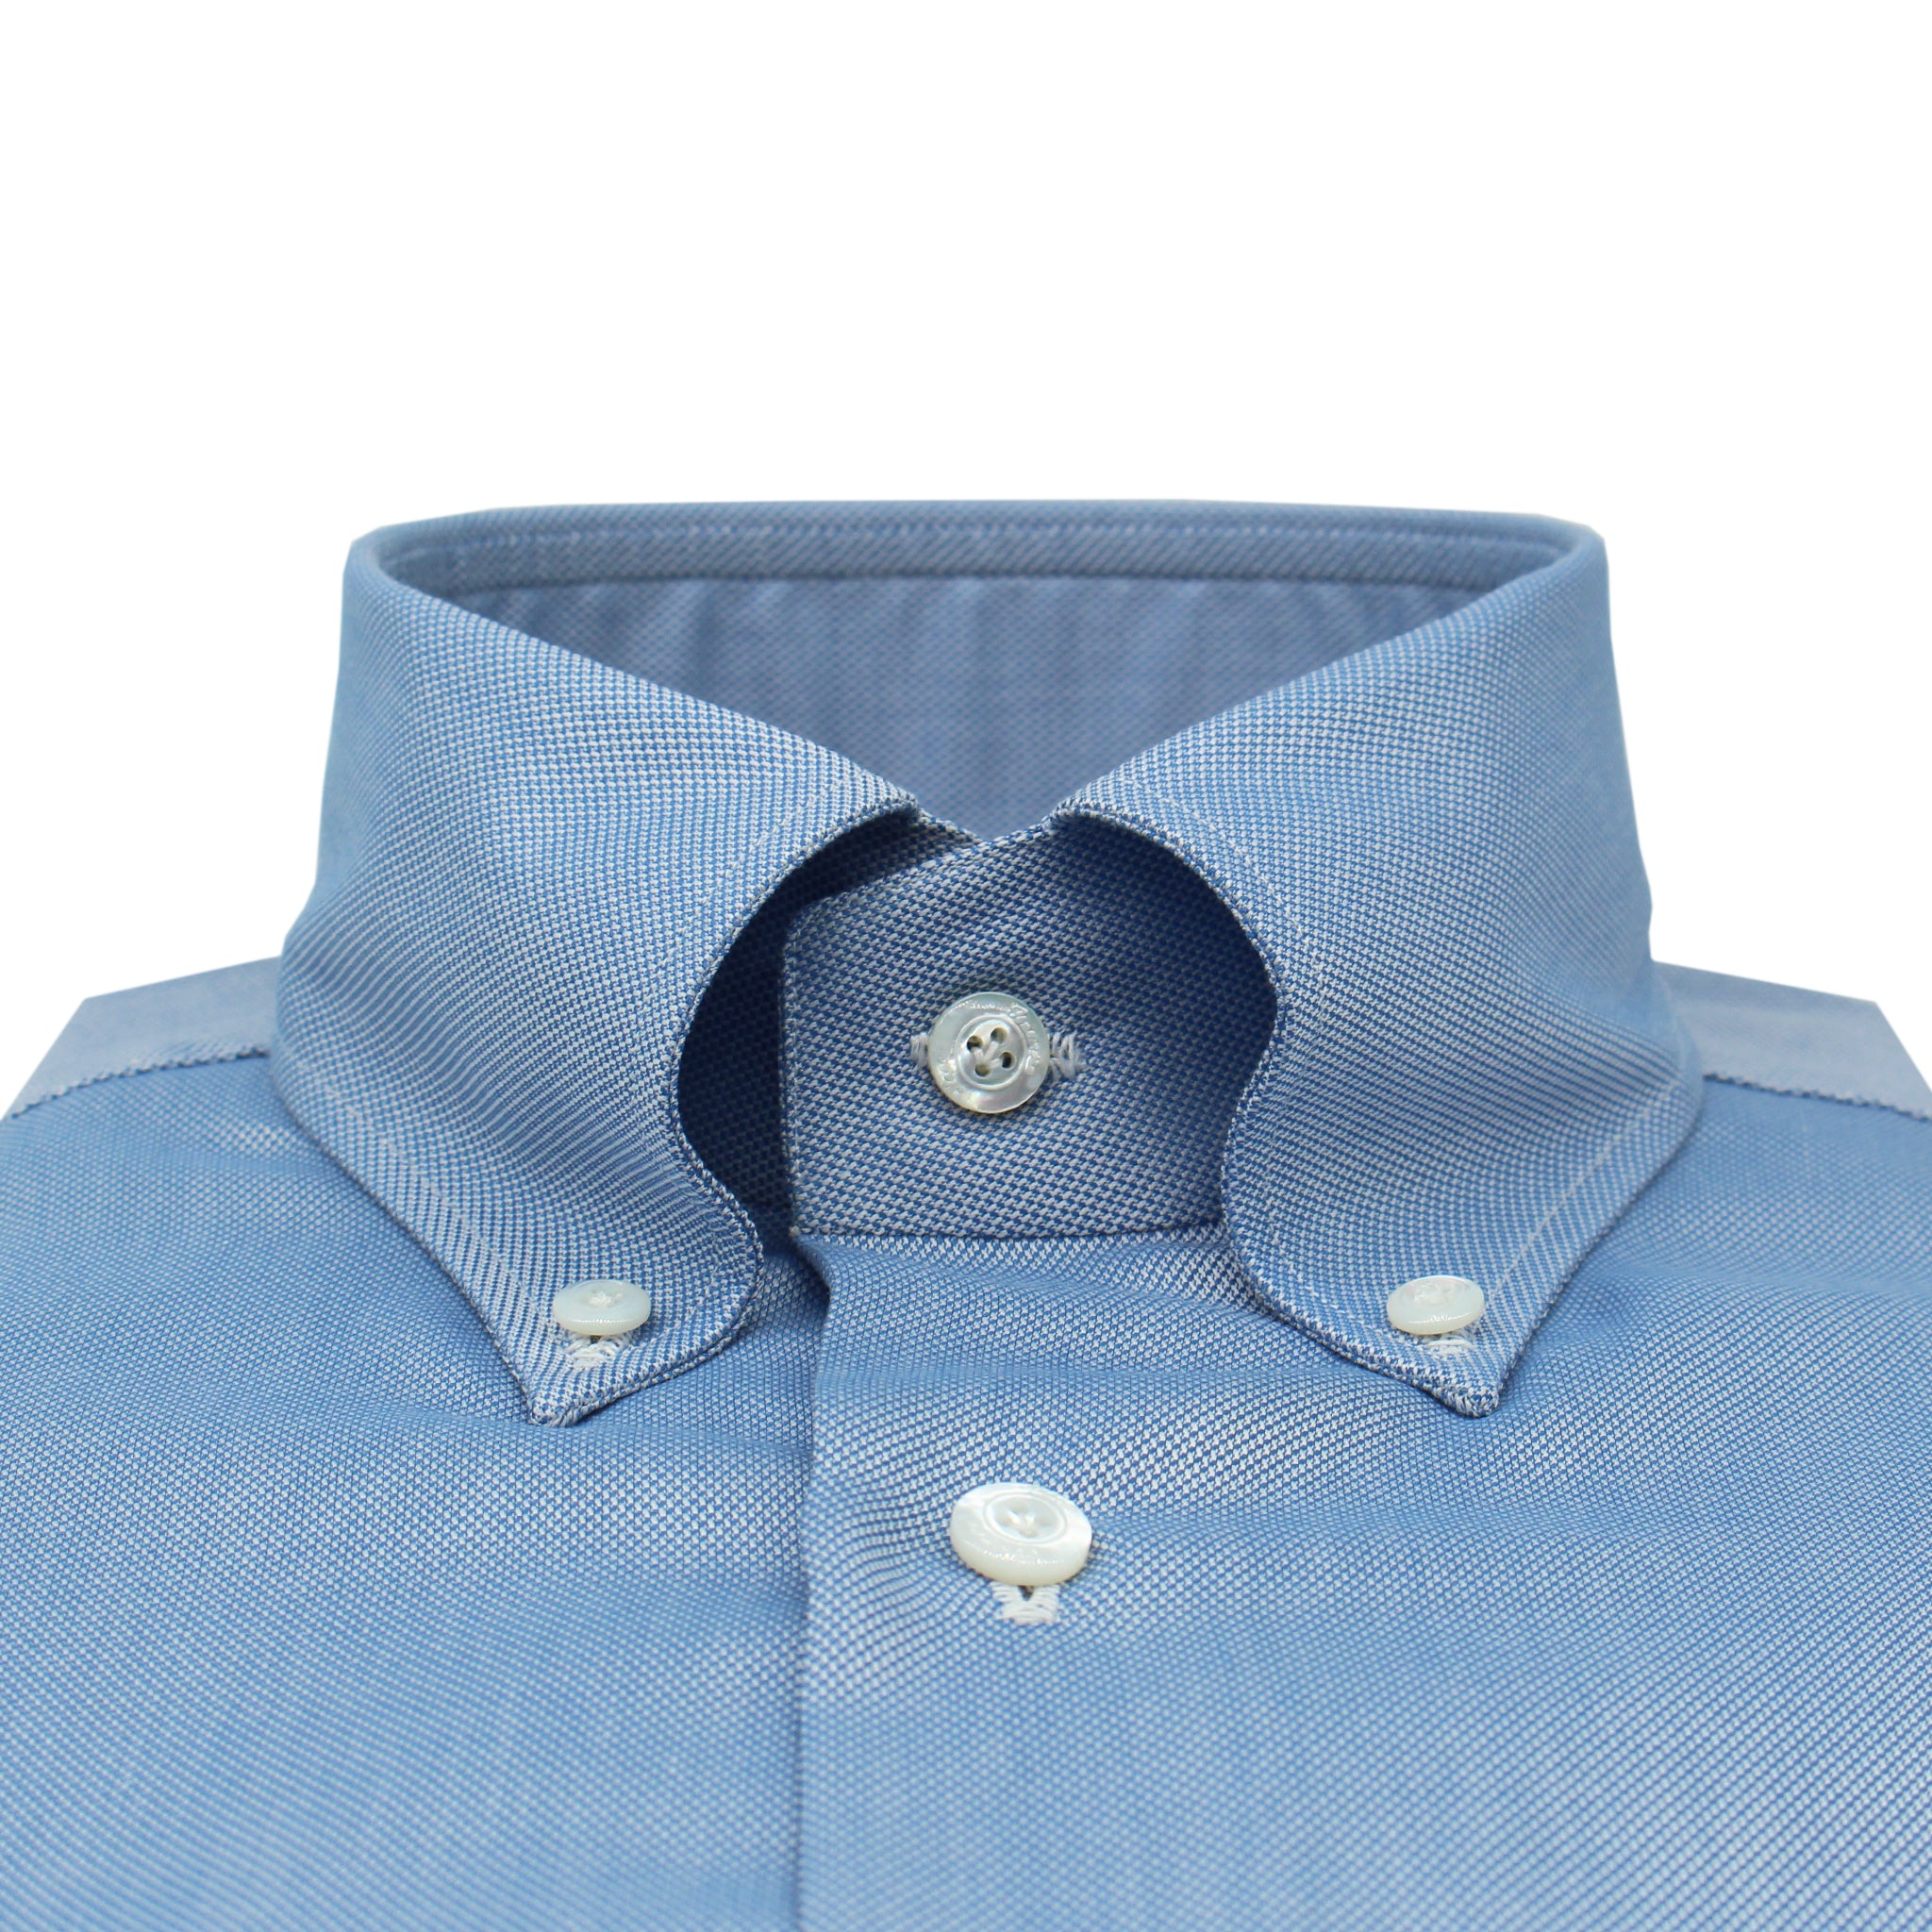 Classic Naples regular-fit cotton oxford blue shirt button down